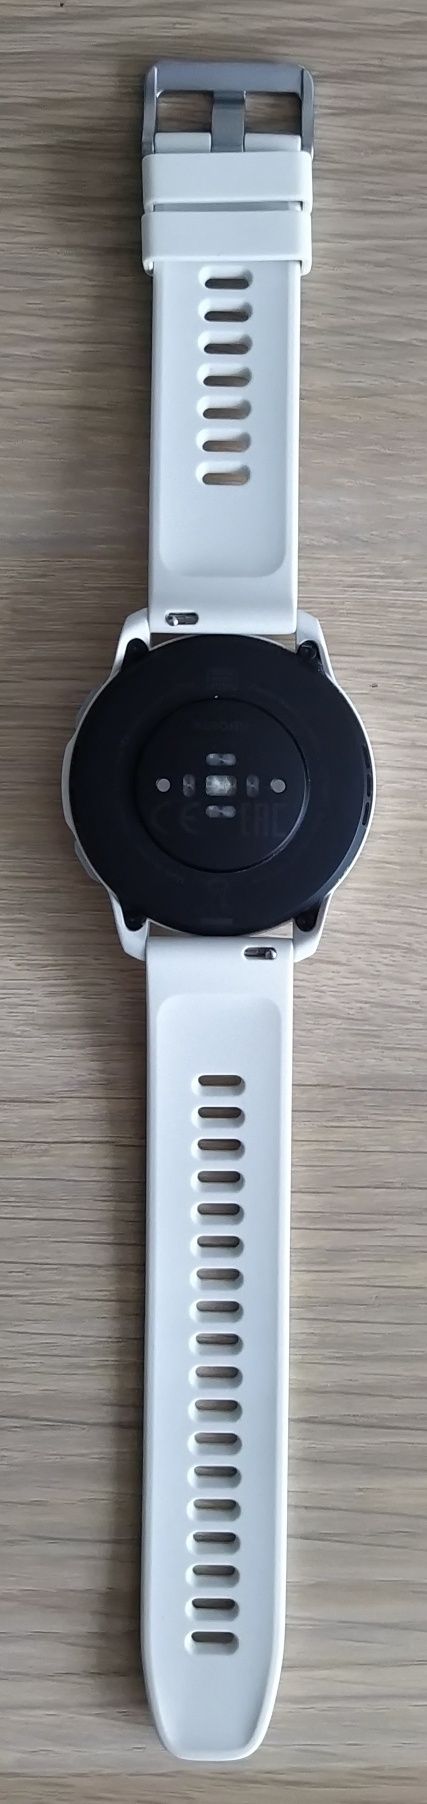 Смарт часы Xiaomi Watch S1 Active